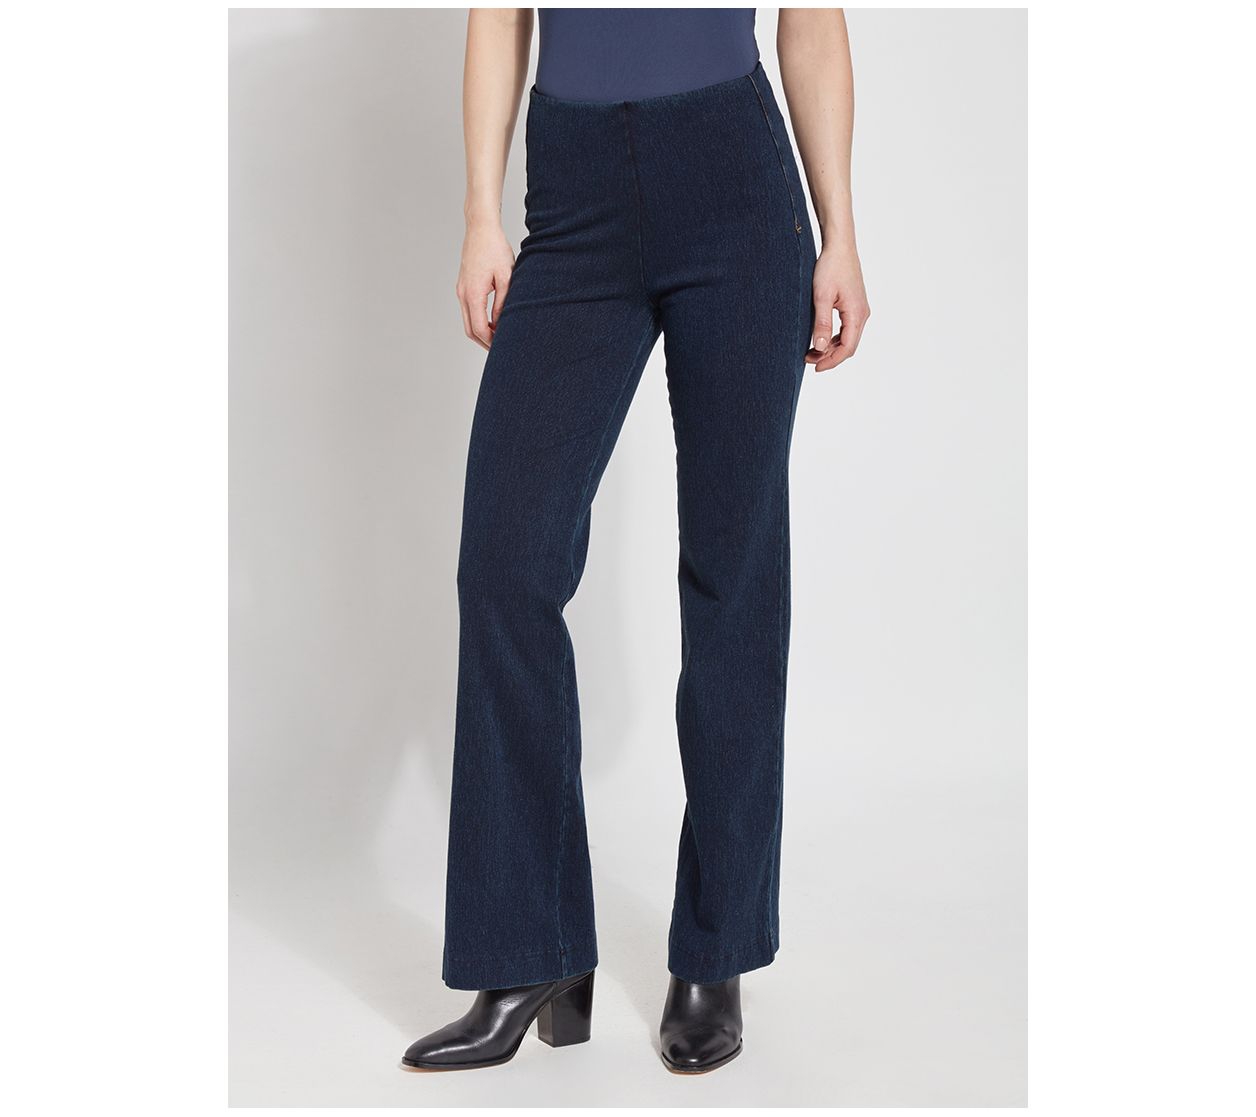 Denim Trouser Jean (Plus Size)  Lyssé New York: Fabric. Fit. Fashion. –  LYSSÉ